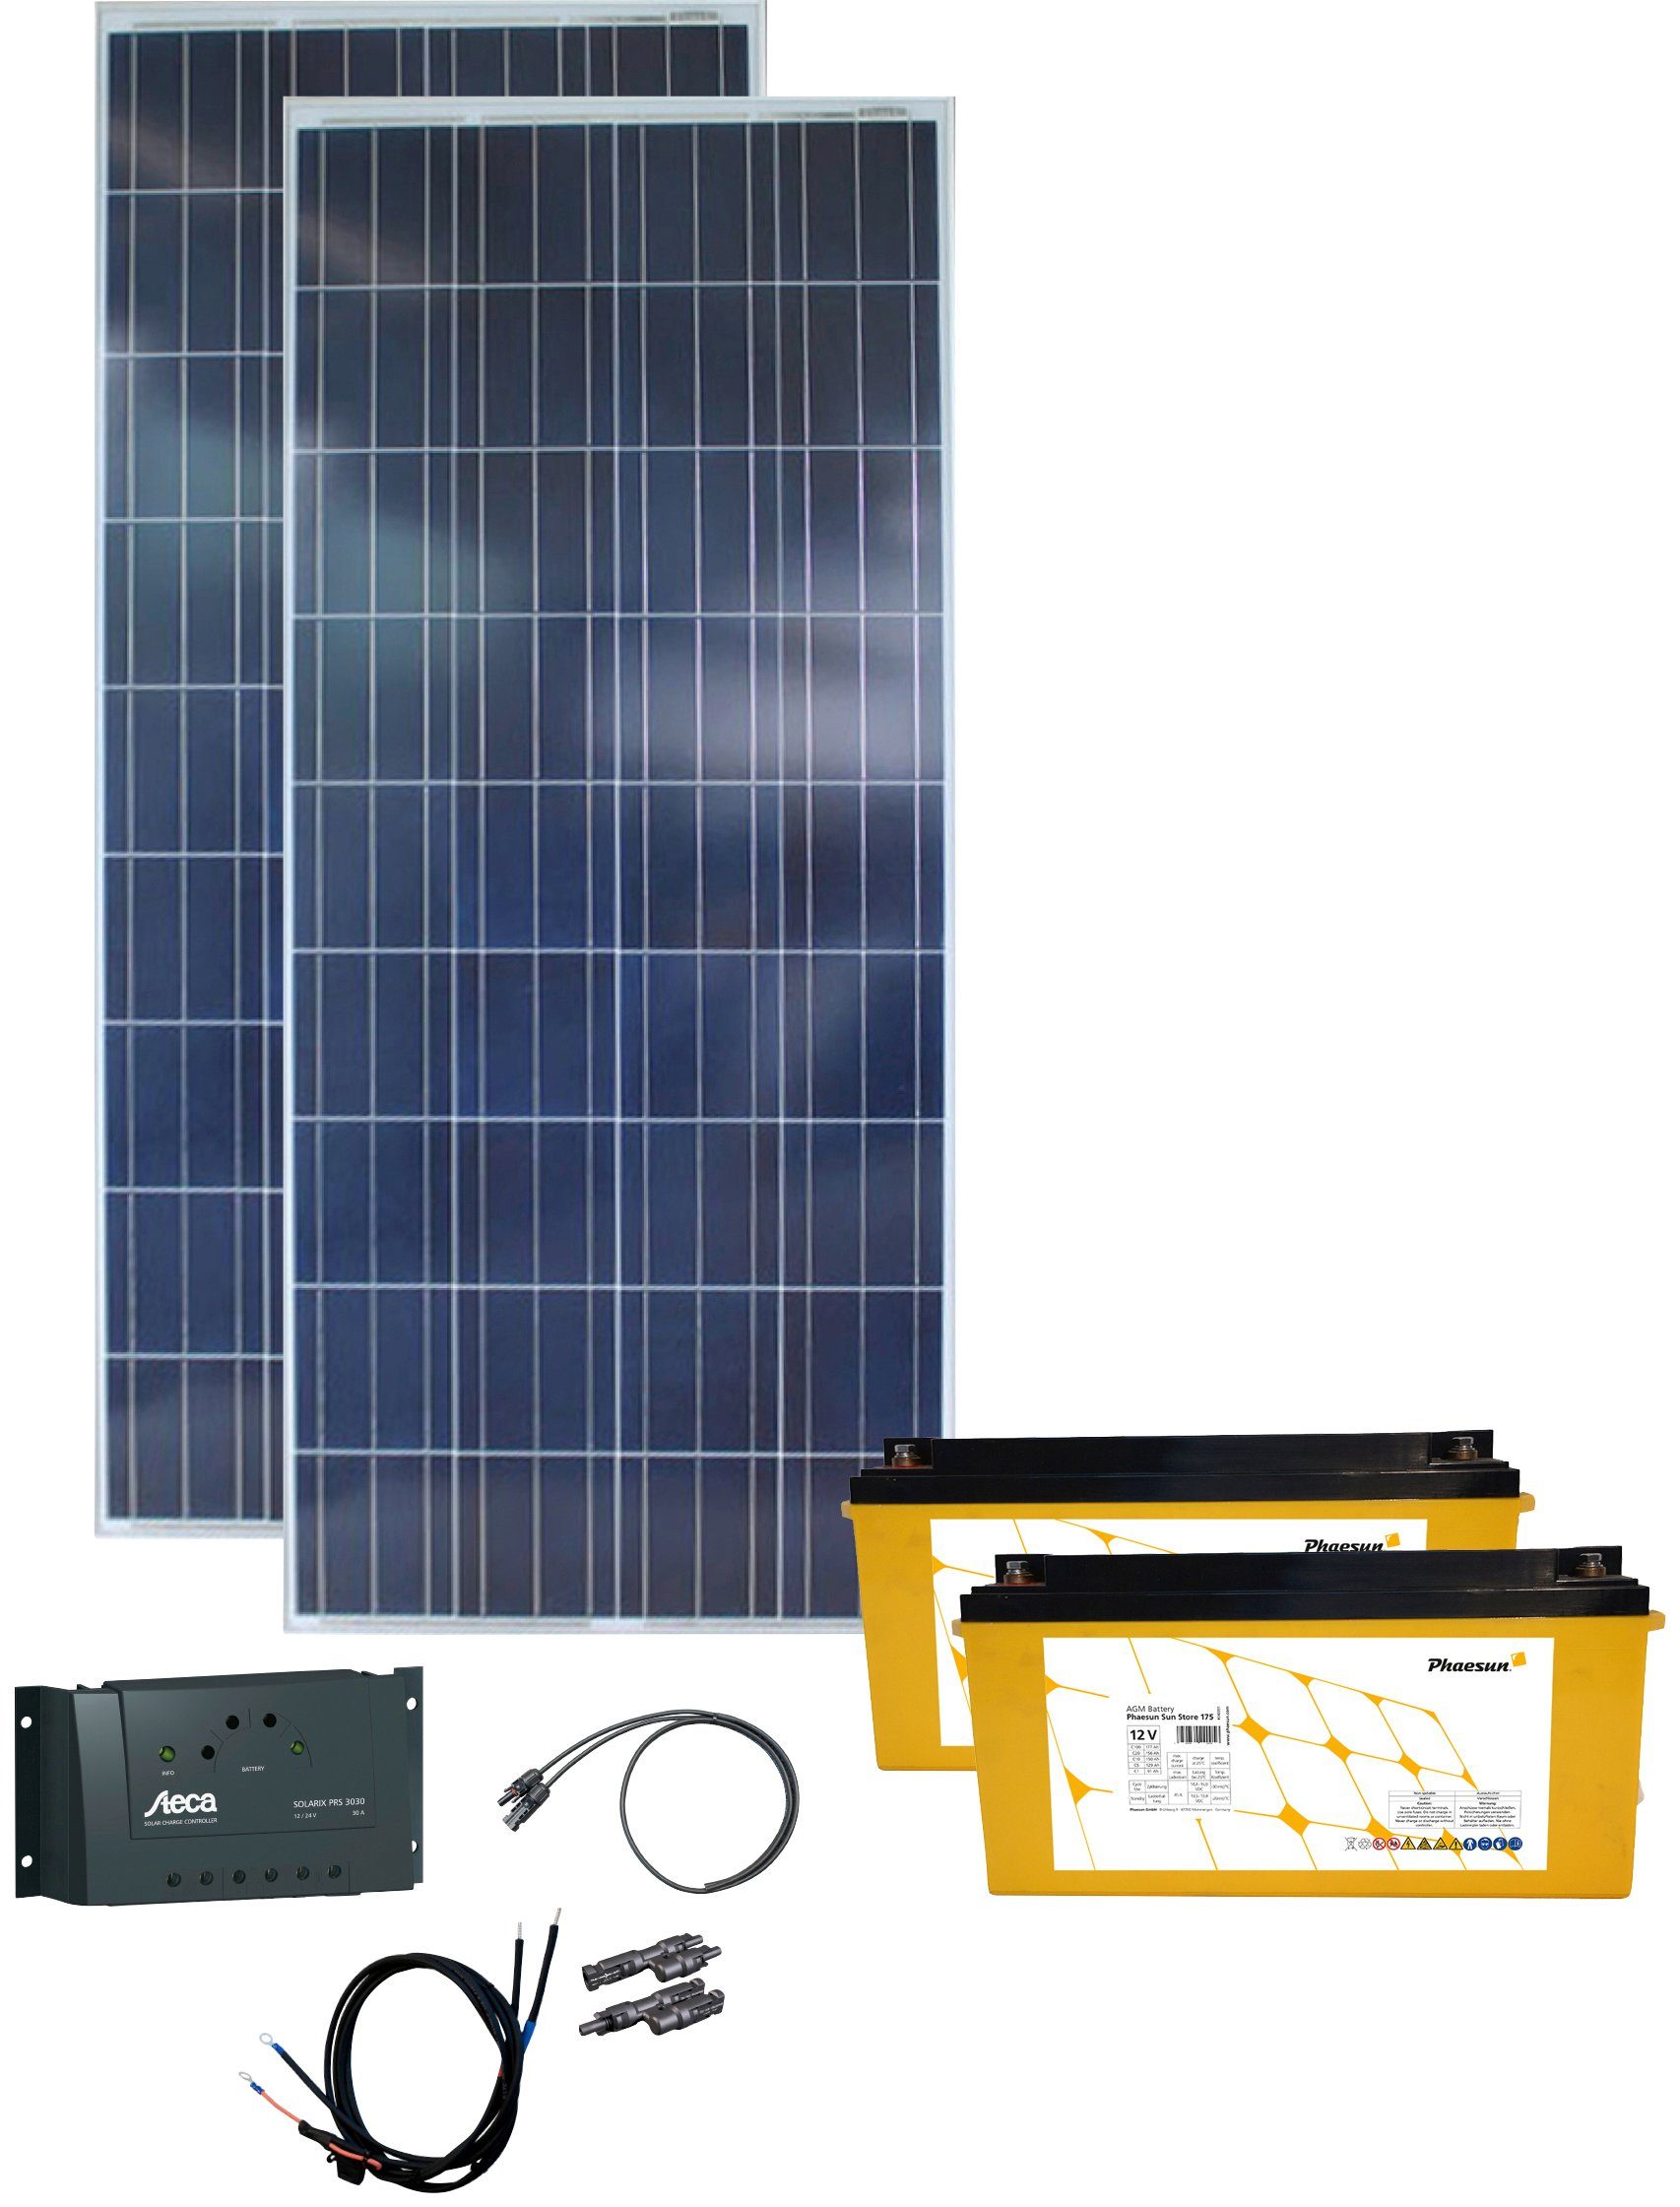 W, Kit 165 (Set), Generation Phaesun Energy Rise, Solar Solarmodul 165 W